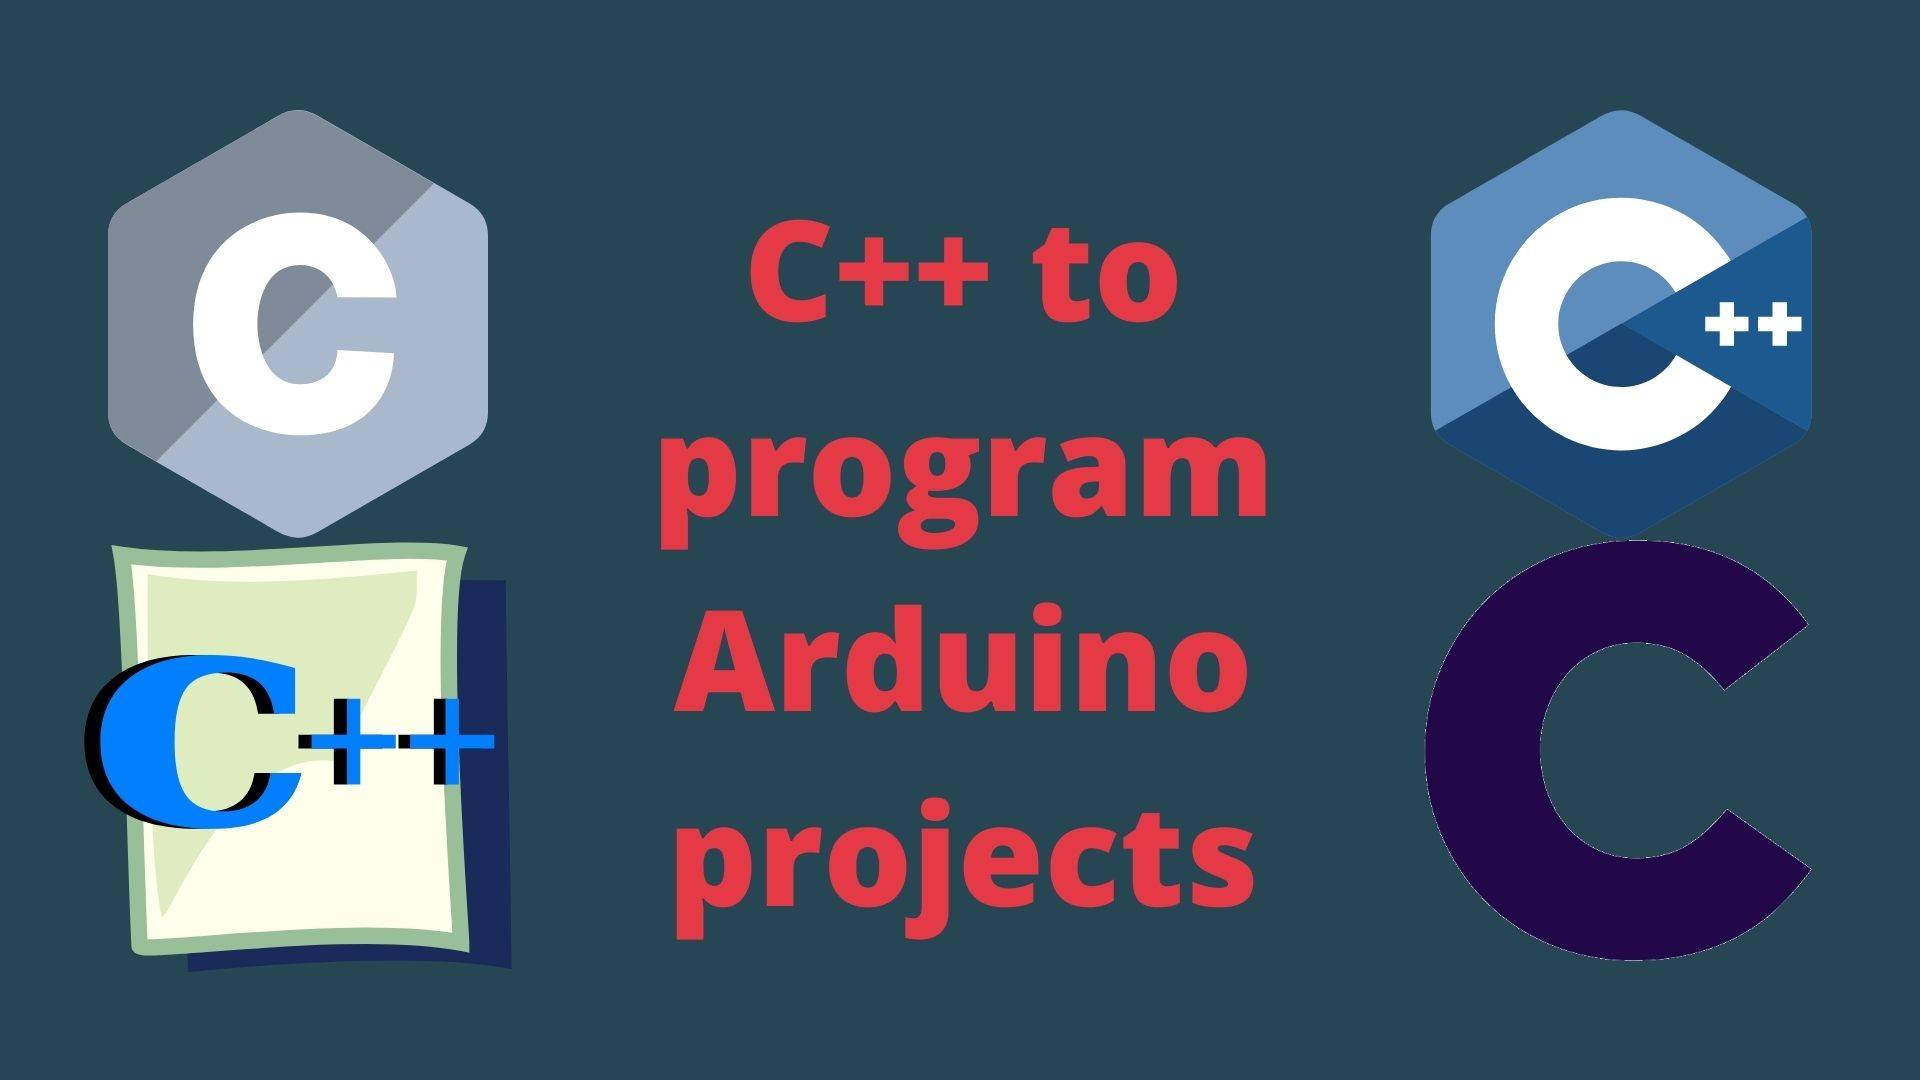 the basics concepts of C++ programming